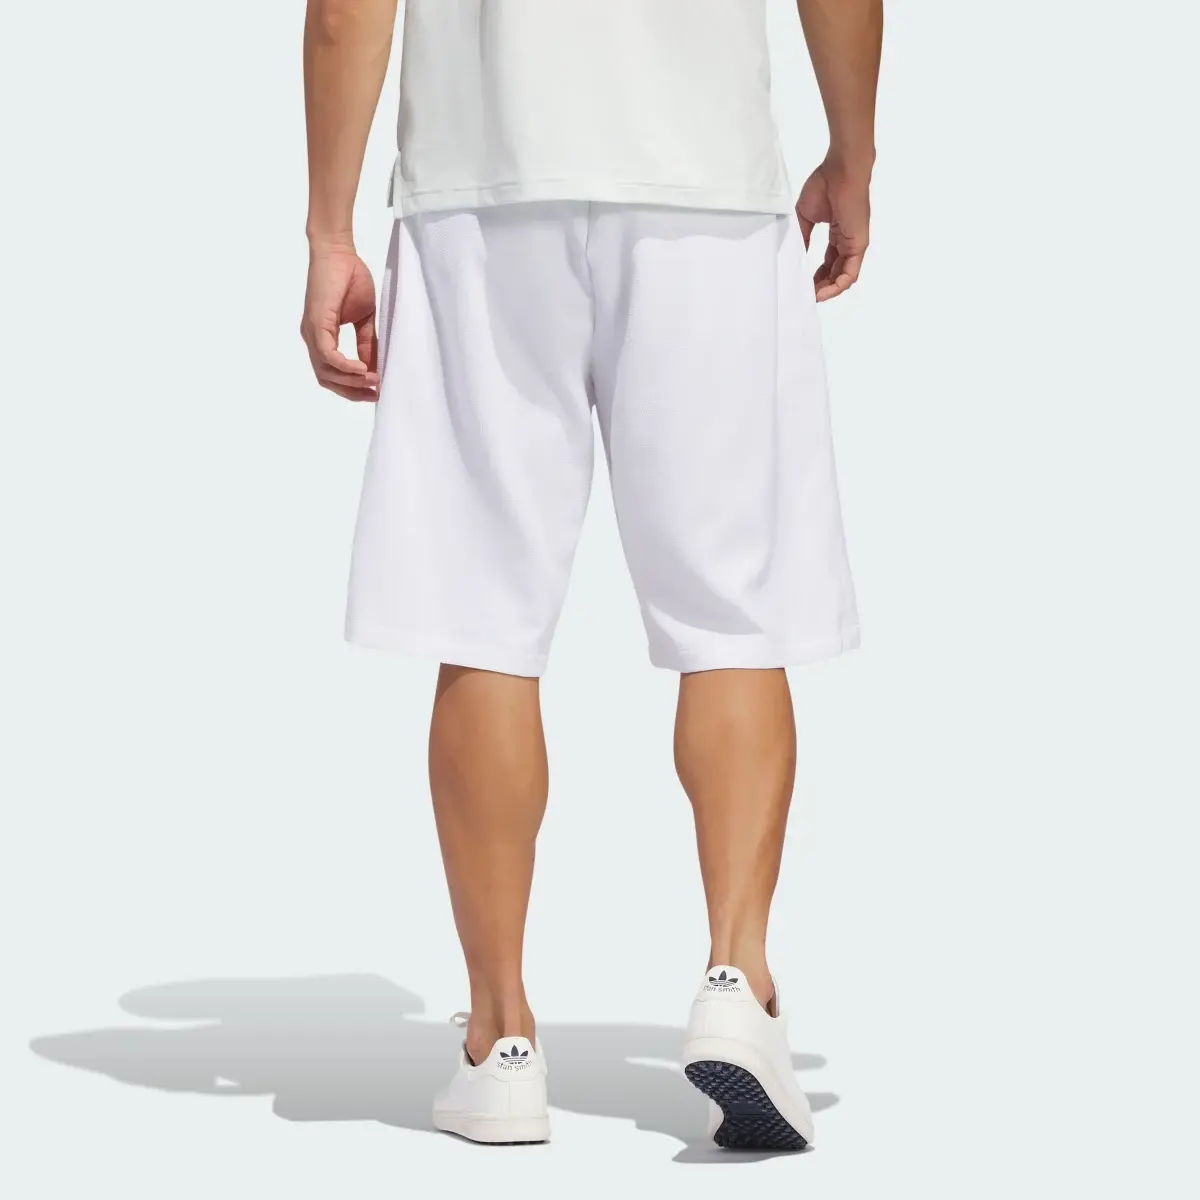 Adidas Malbon Shorts. 2